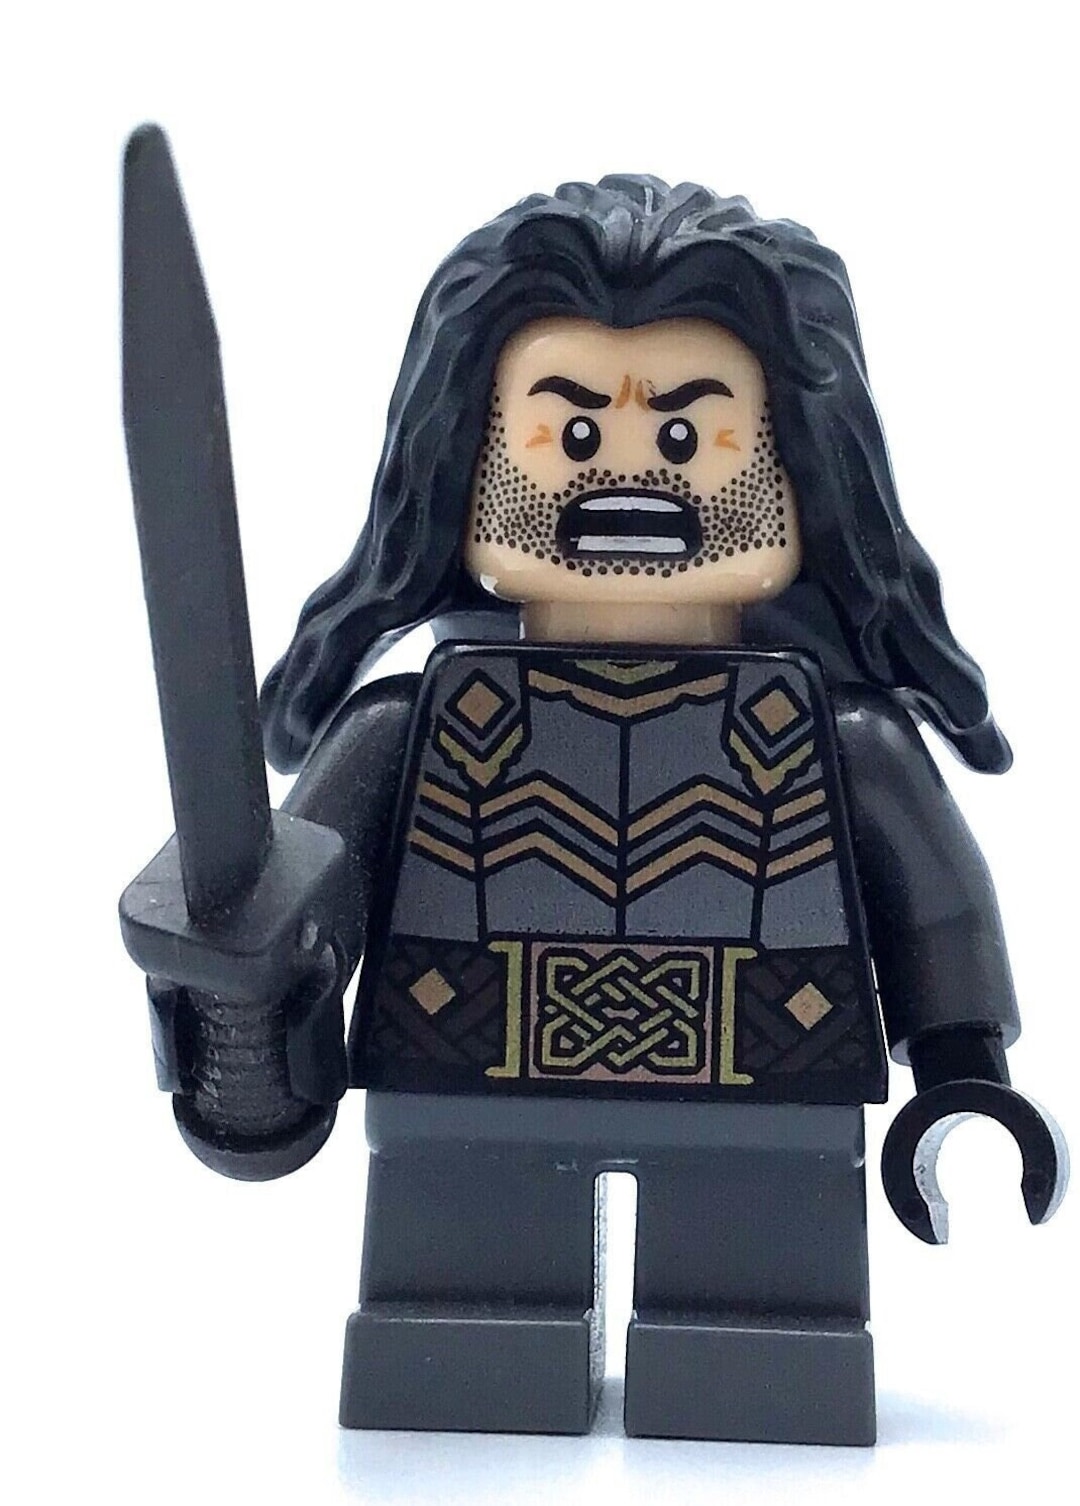 Lego MINIFIGURE Hobbit Lord of the Rings Kili the Dwarf -